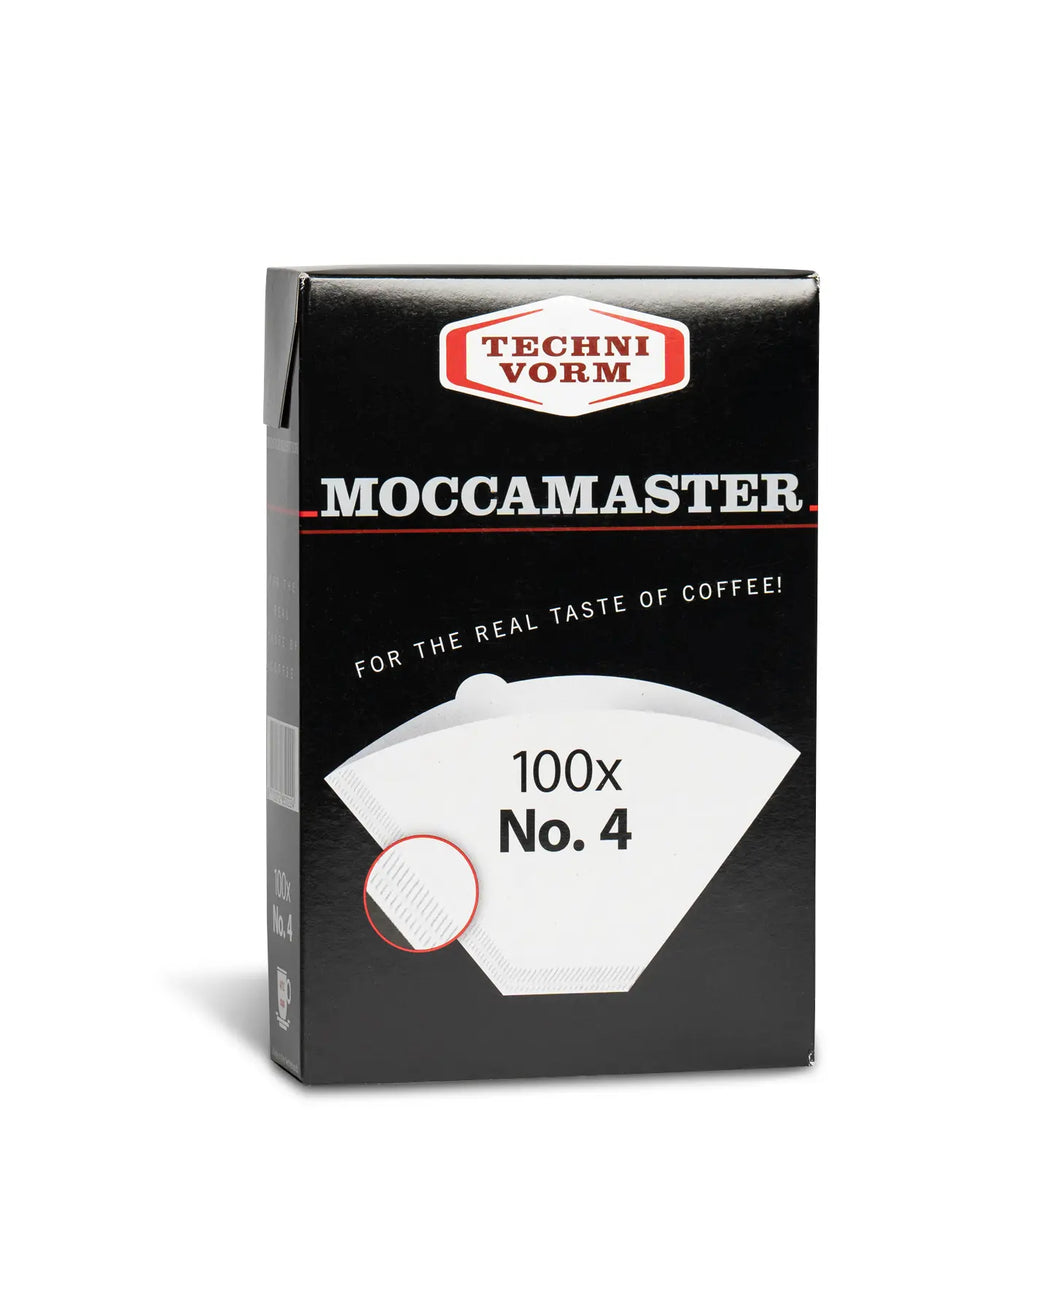 Moccamaster Coffee Filter. No. 4 - 100 per box.